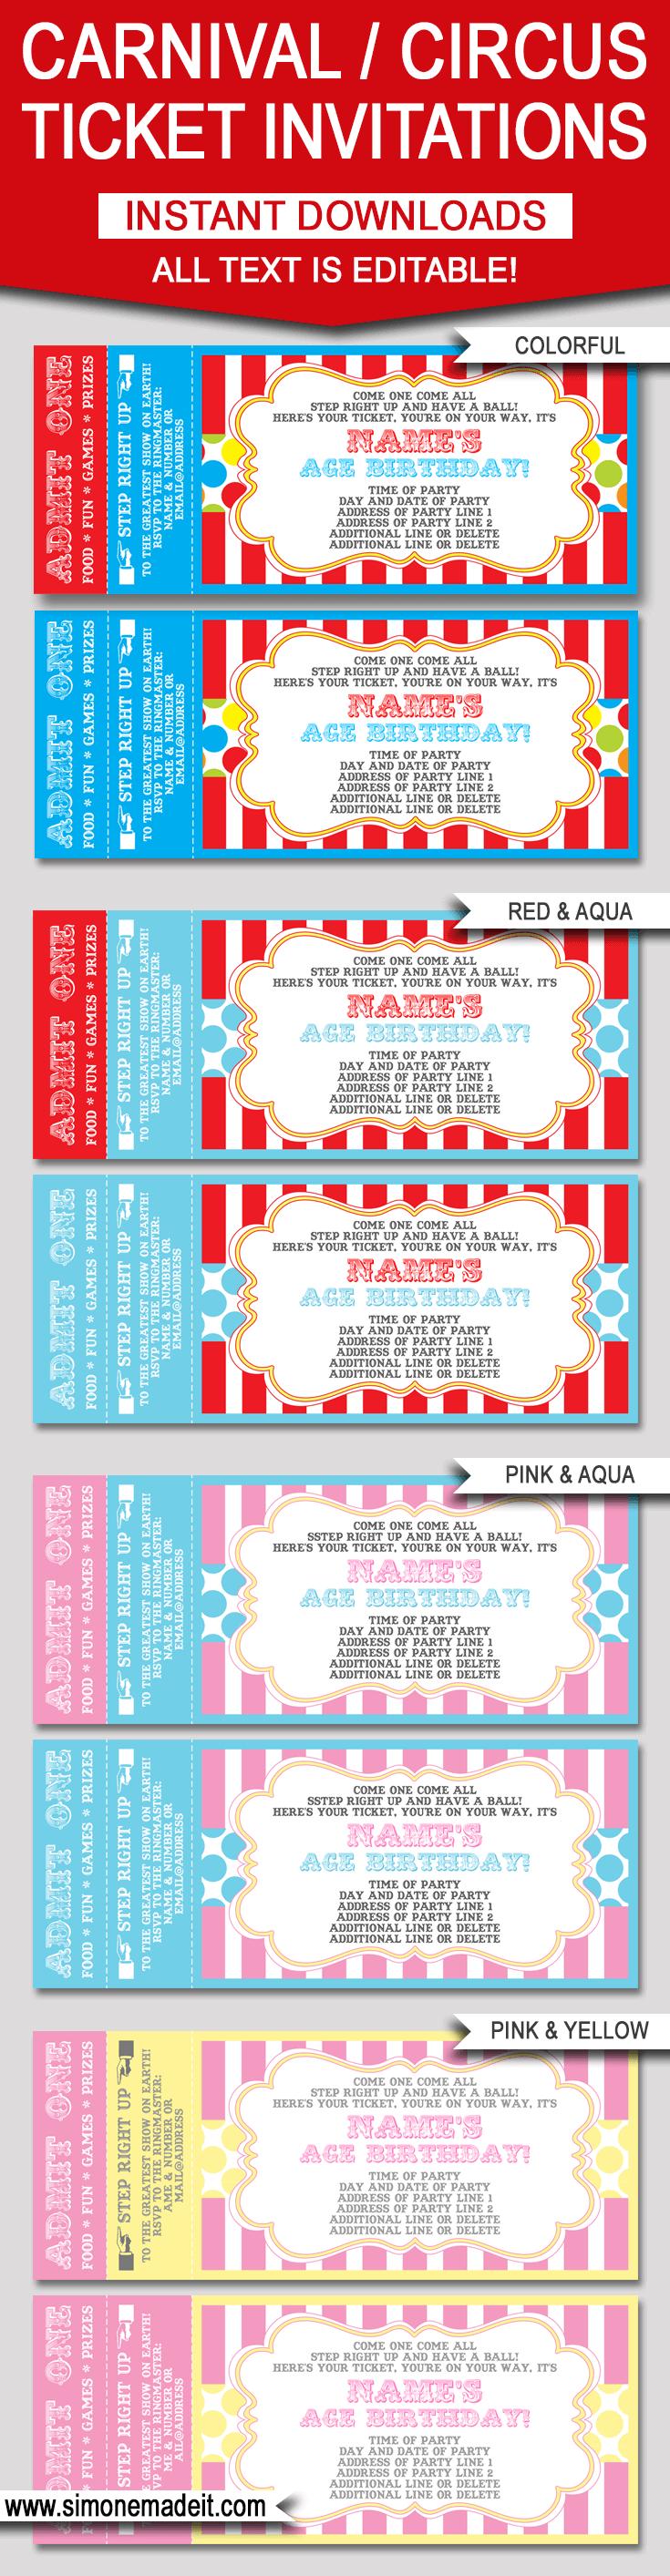 Editable Carnival Ticket Invitations | Editable Circus Ticket Invitations | Birthday Party | Big Top | Editable and Printable Invitation Templates | INSTANT DOWNLOADS $7.50 via simonemadeit.com